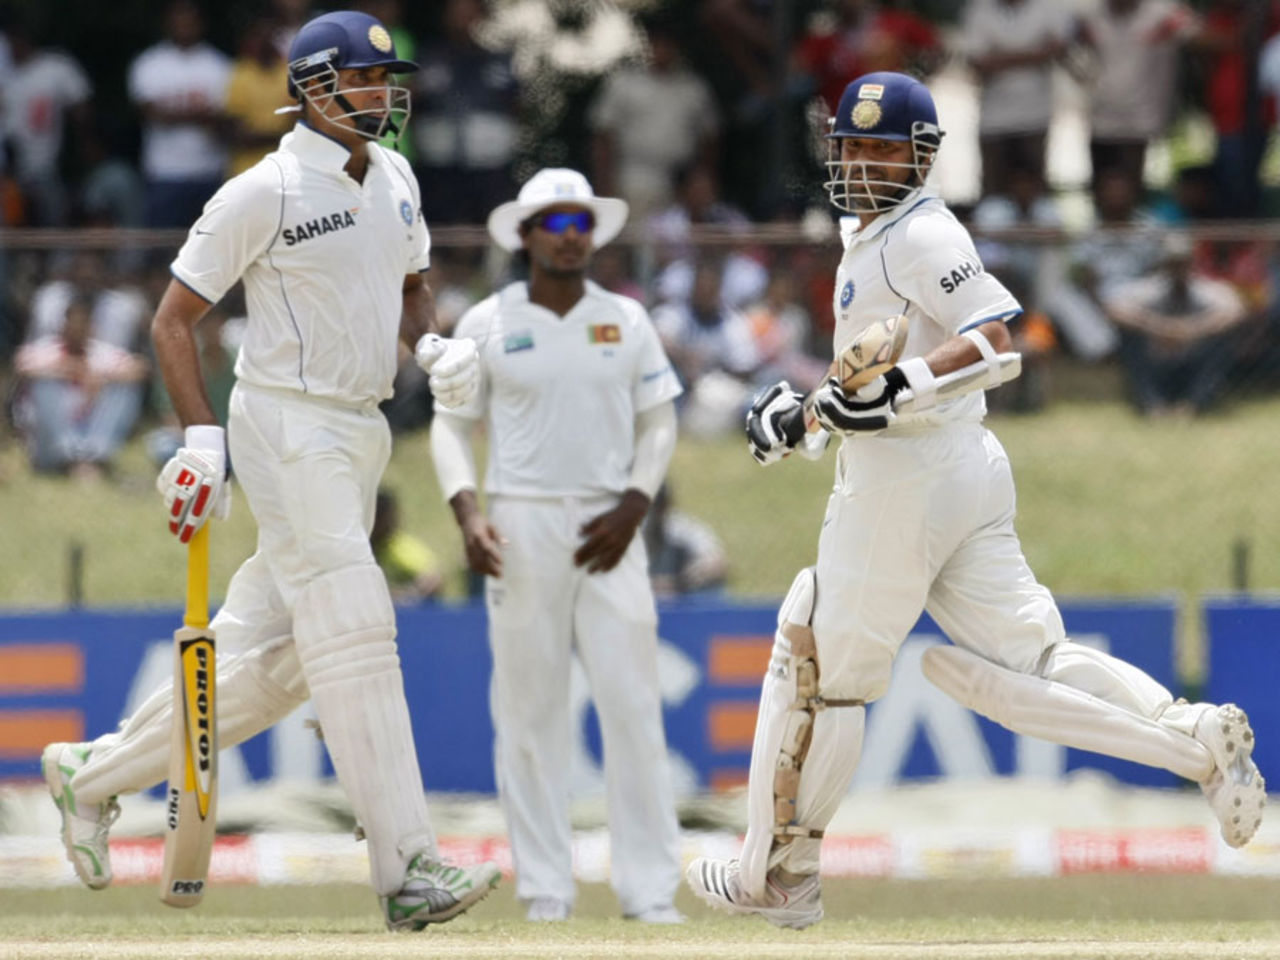 VVS Laxman and Sachin Tendulkar added 109 runs for the fifth wicket, Sri Lanka v India, 3rd Test, P Sara Oval, 5th day, August 7, 2010